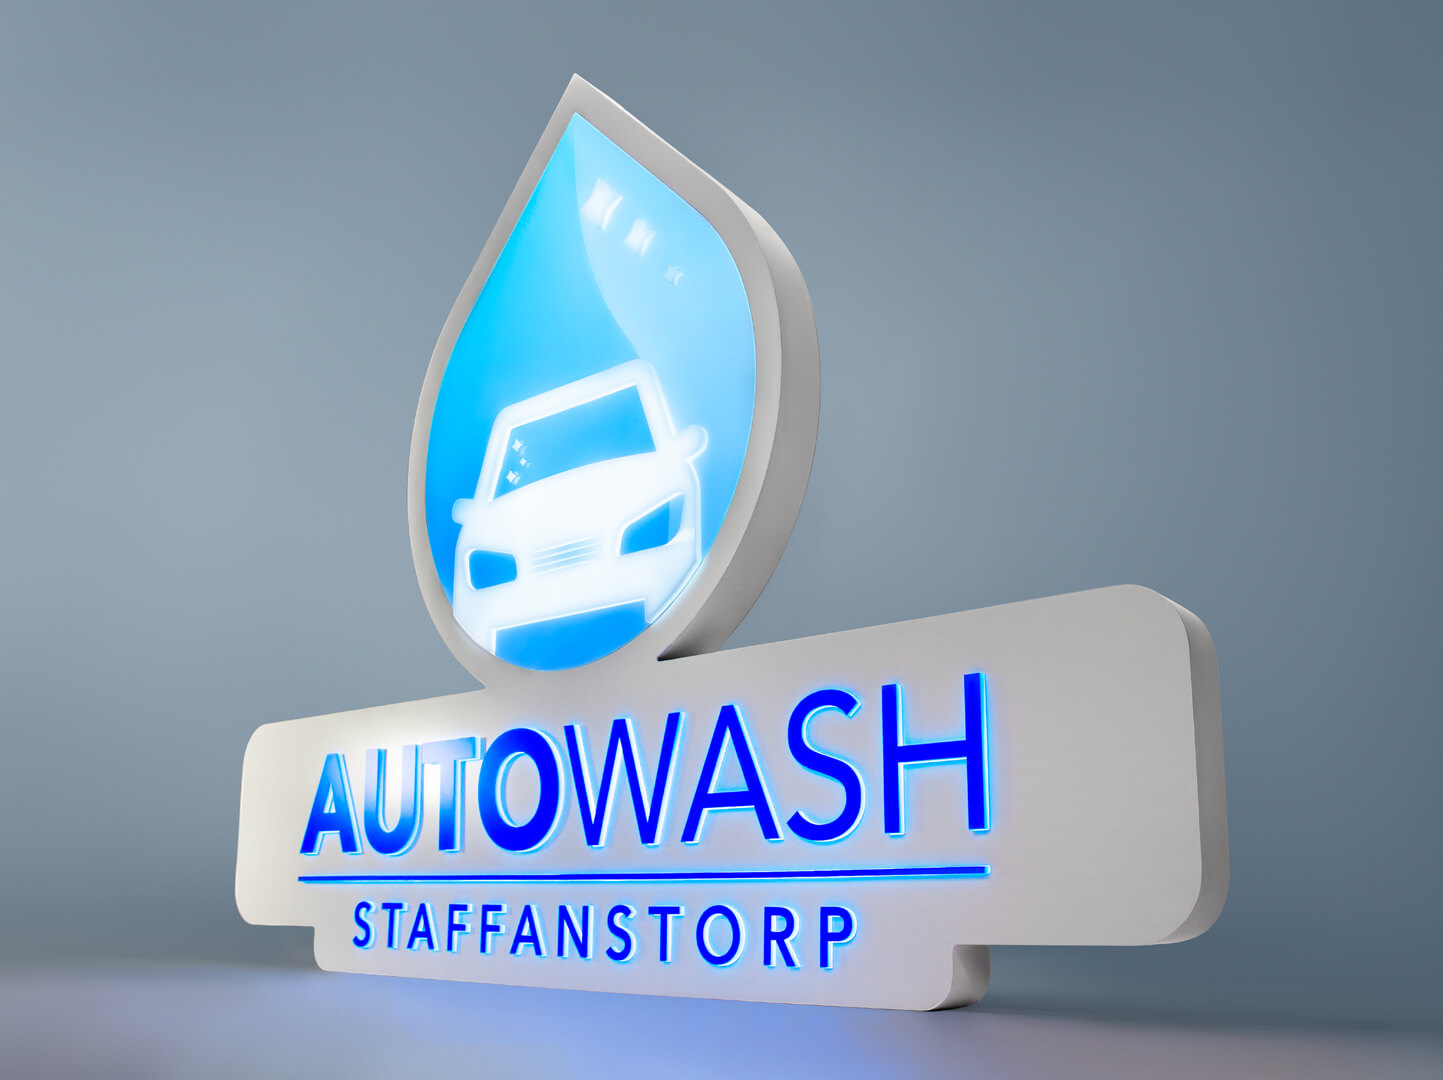 Autowash - Single-sided lightbox box in the shape of a logo for the company Autowash